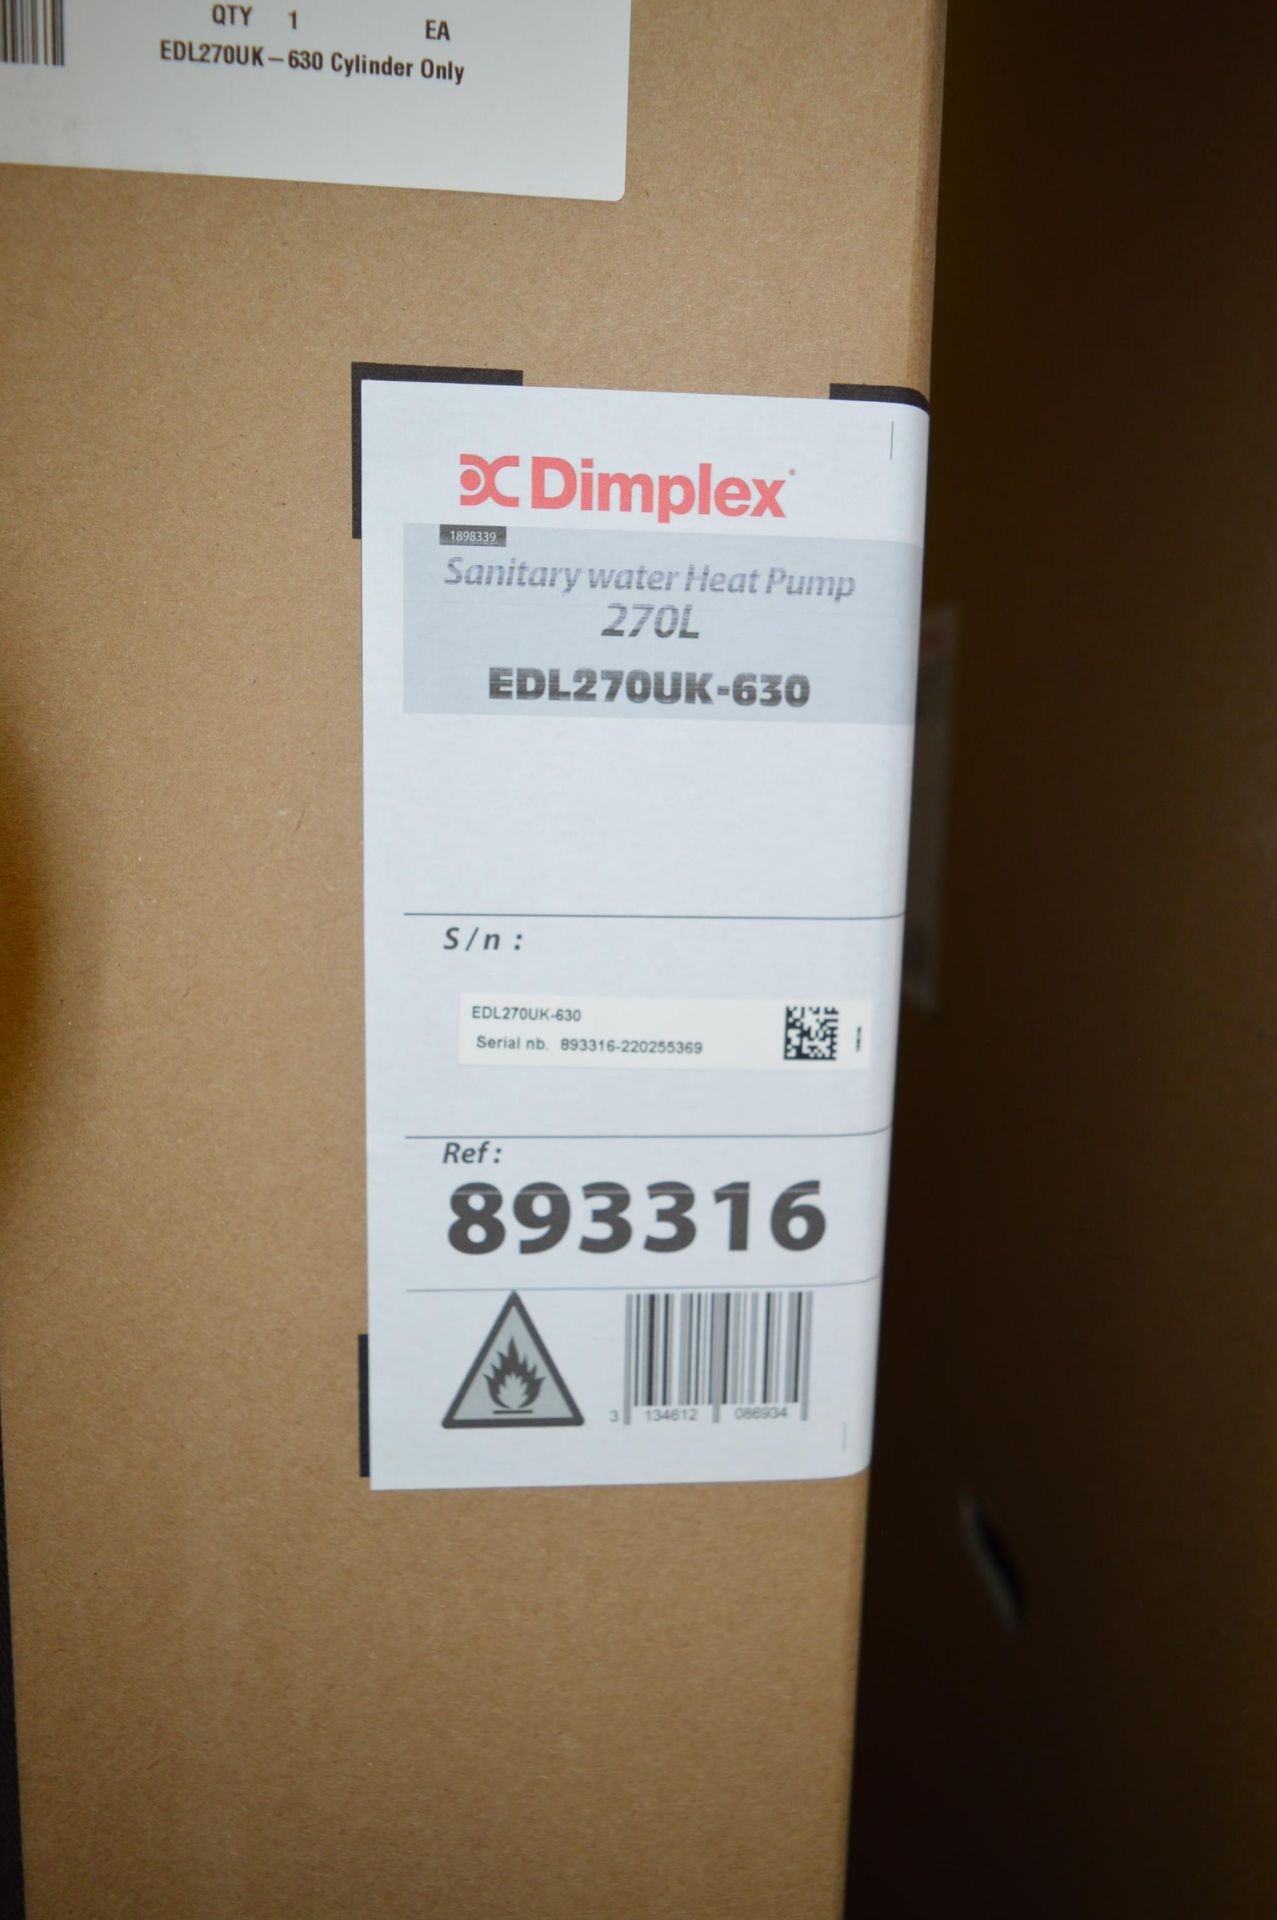 Dimplex, sanitary water heat pump, 270L, Model EDL270UK-630, Serial No. 893316-220255369 (packaged) - Image 2 of 2